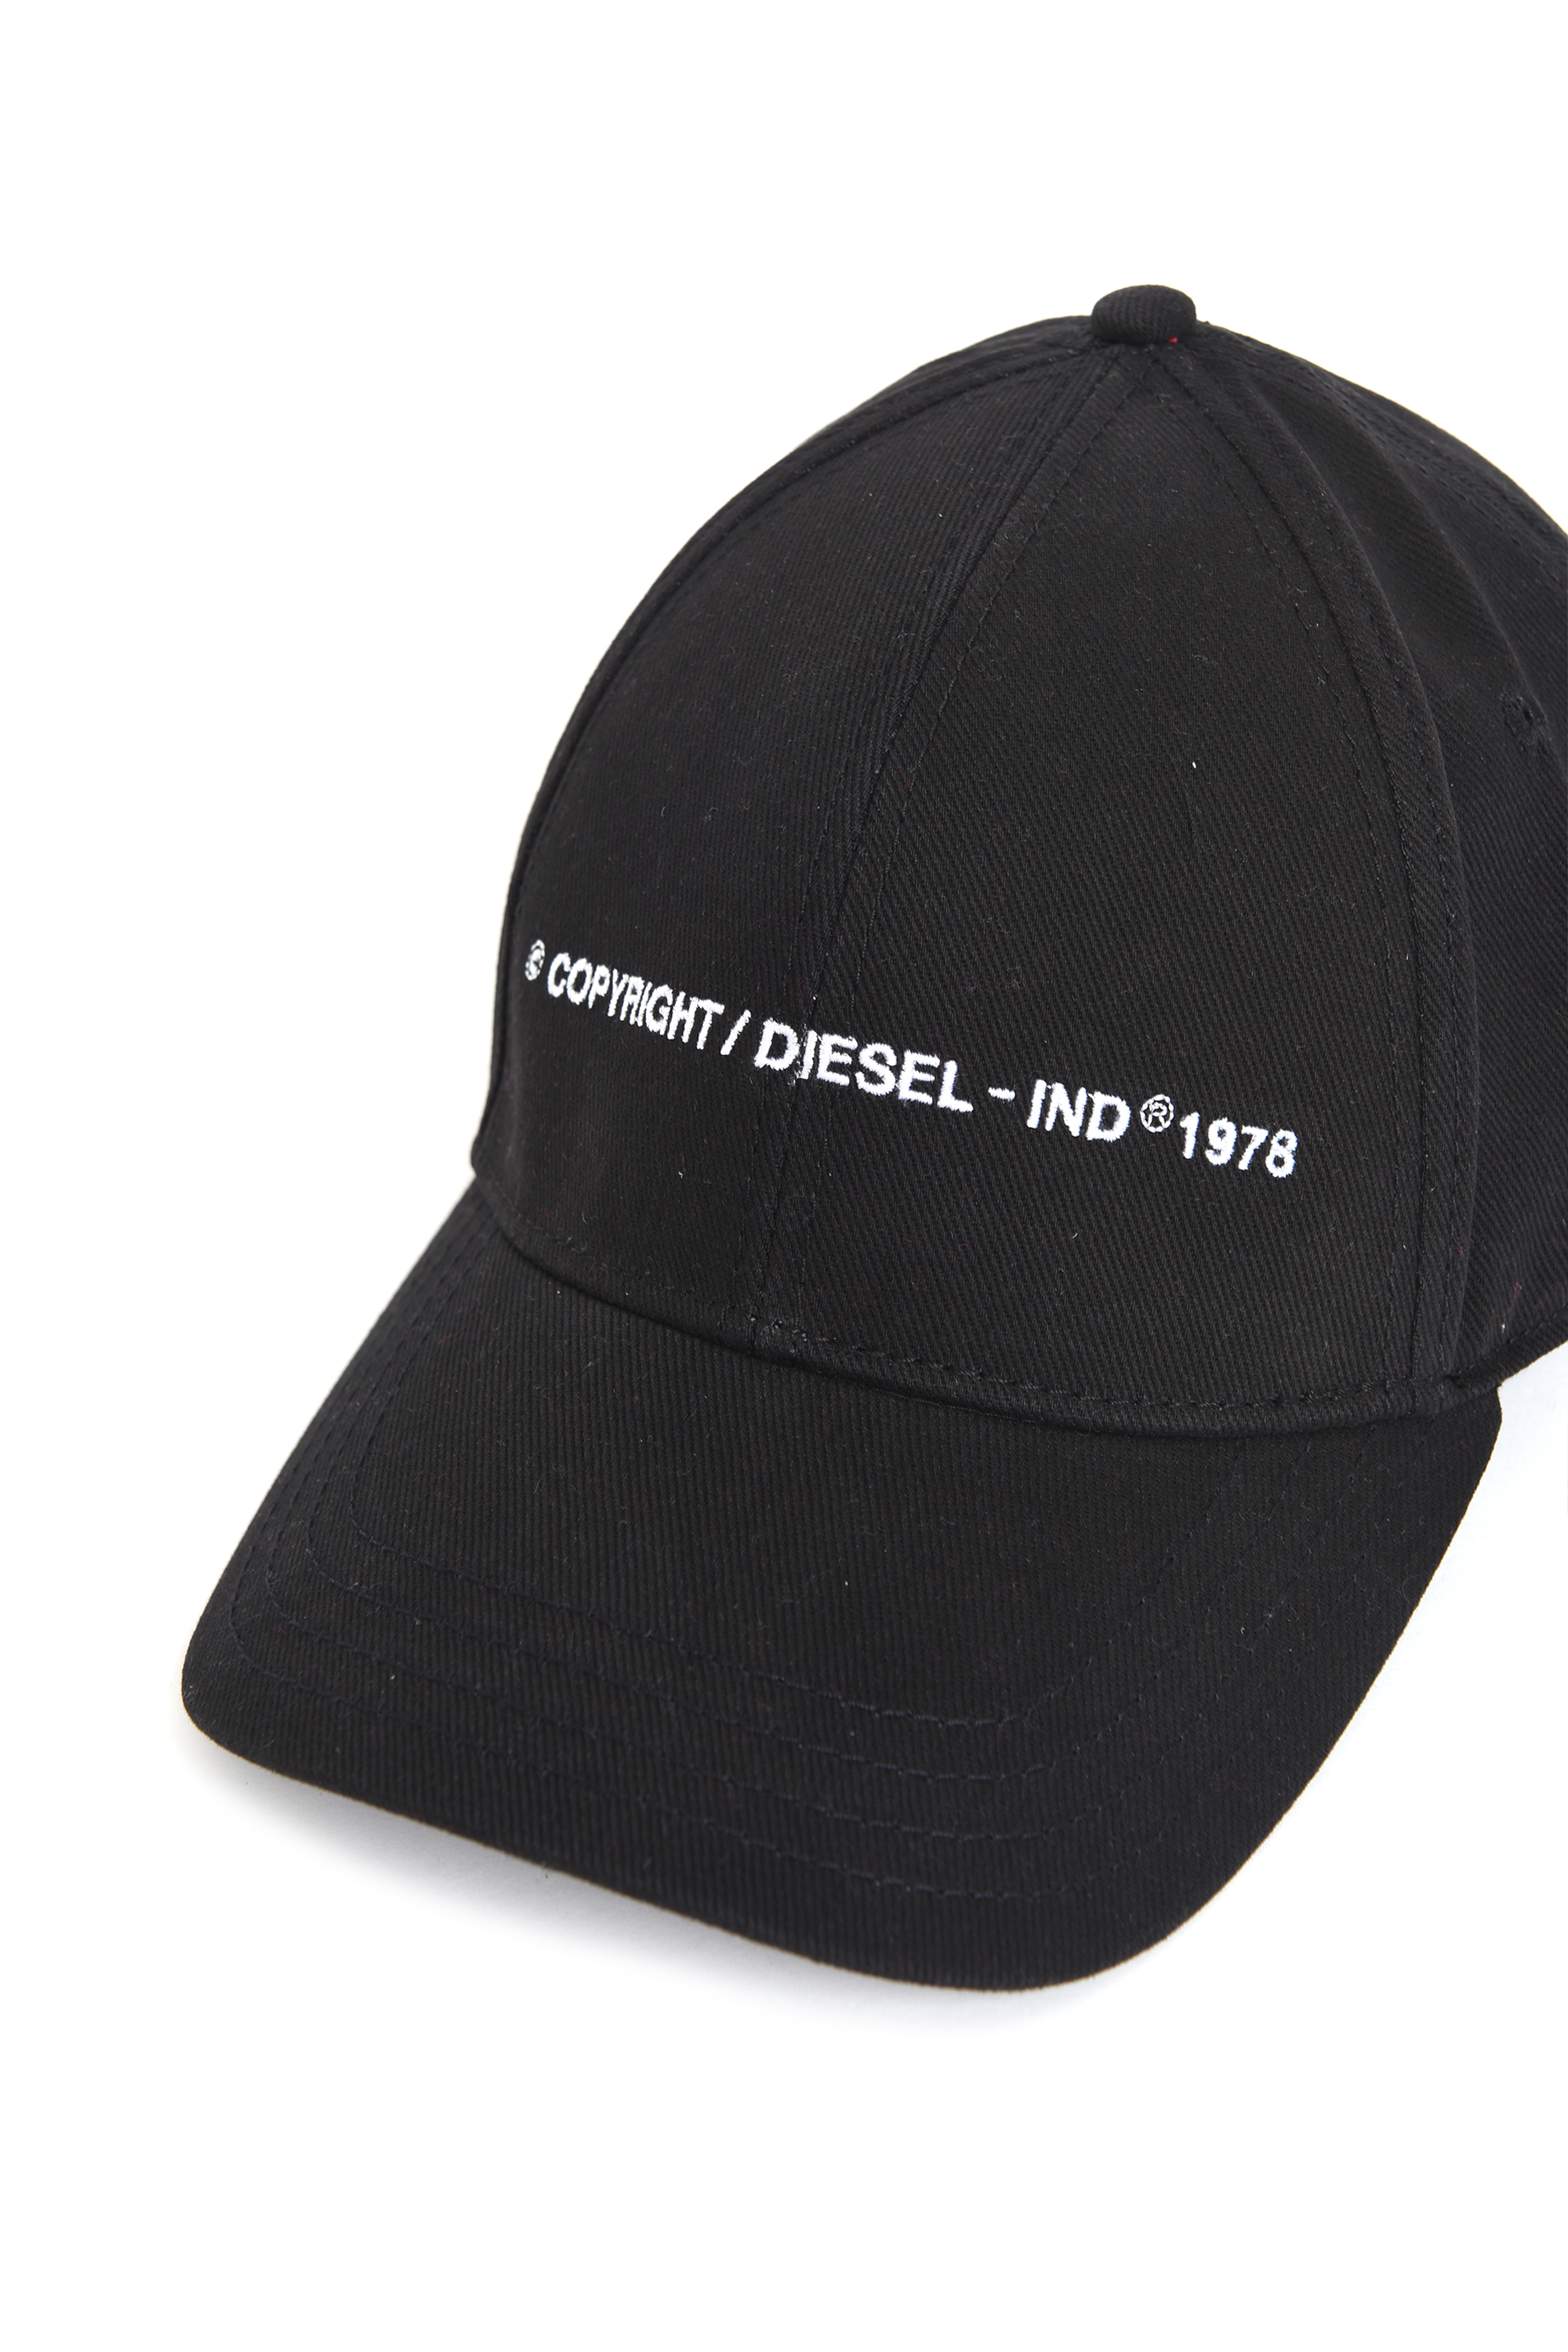 COMIXI Baseball cap with Copyright logo | Diesel